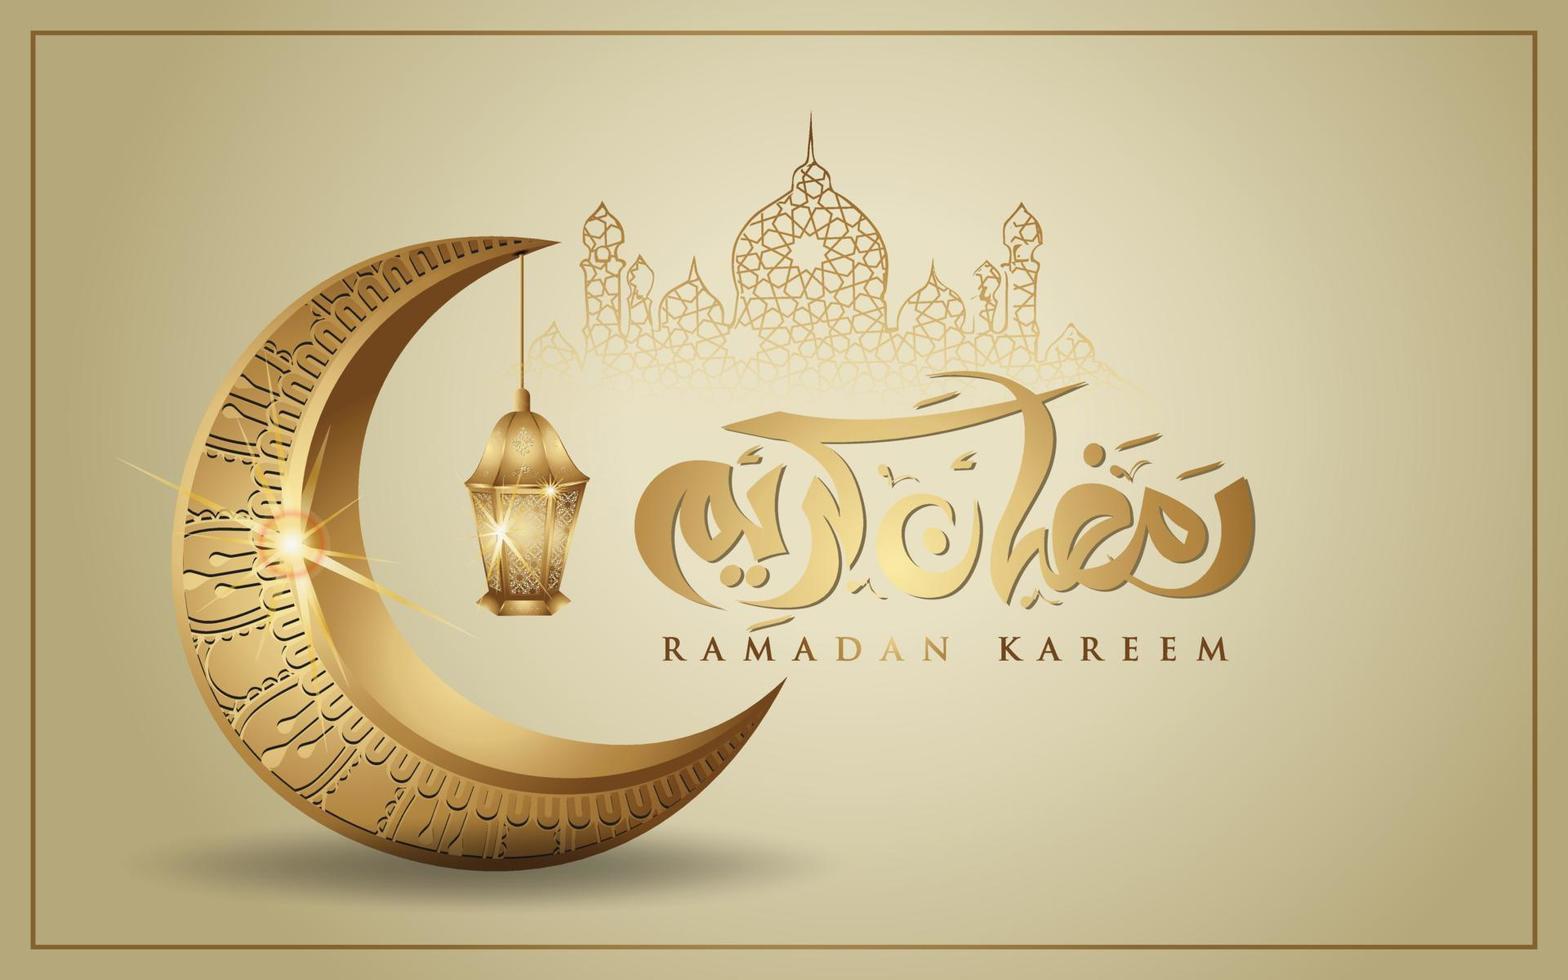 Ramadan kareem with golden luxurious crescent moon, template islamic ornate greeting card vector